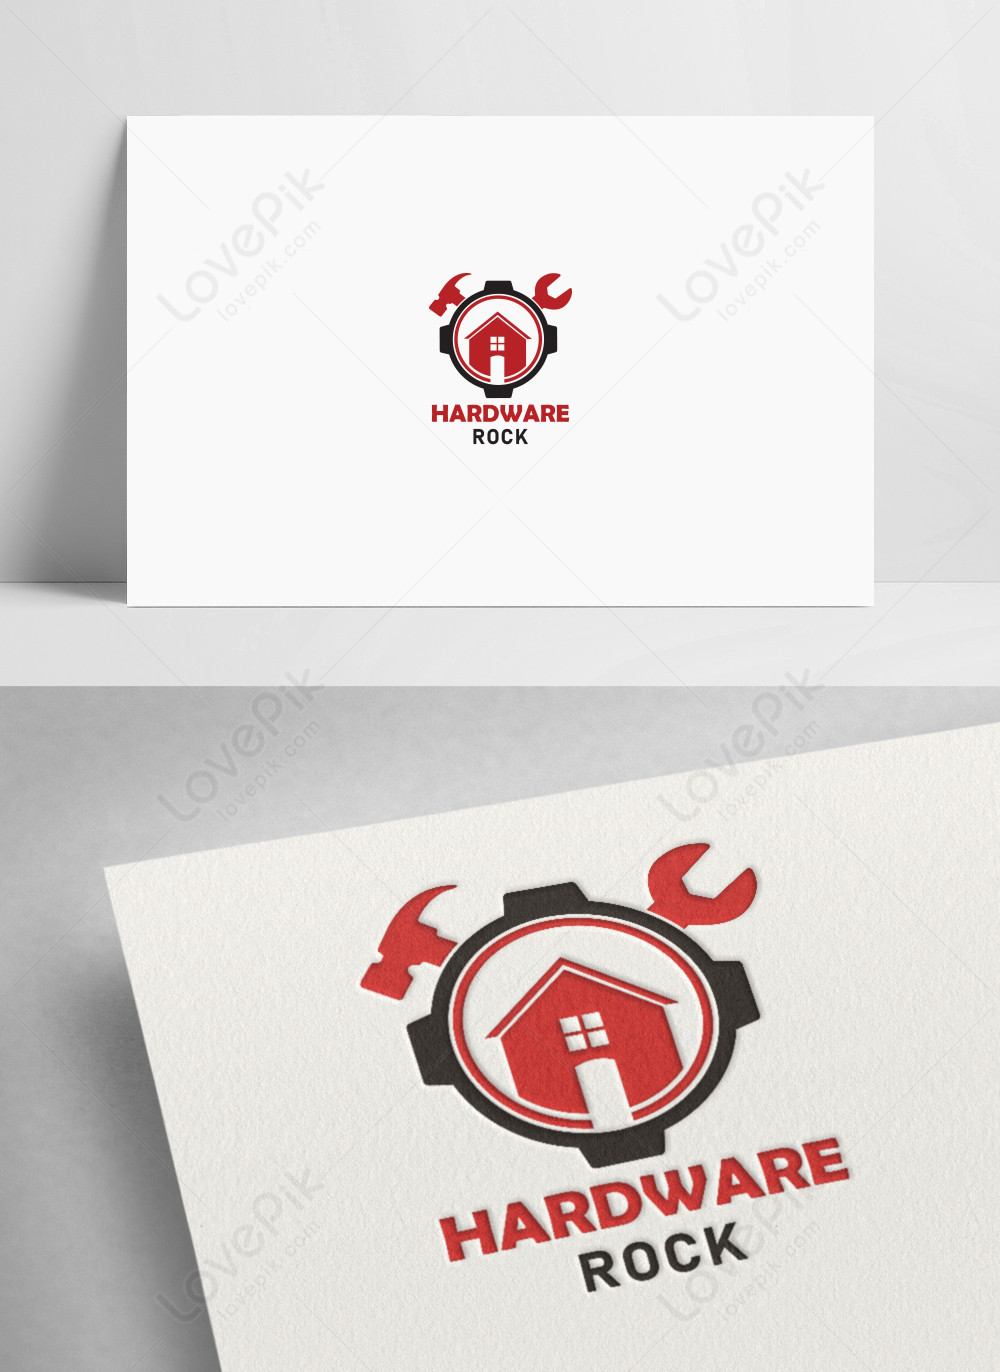 Image result for hardware logo design: | Logo design, ? logo, Company logo